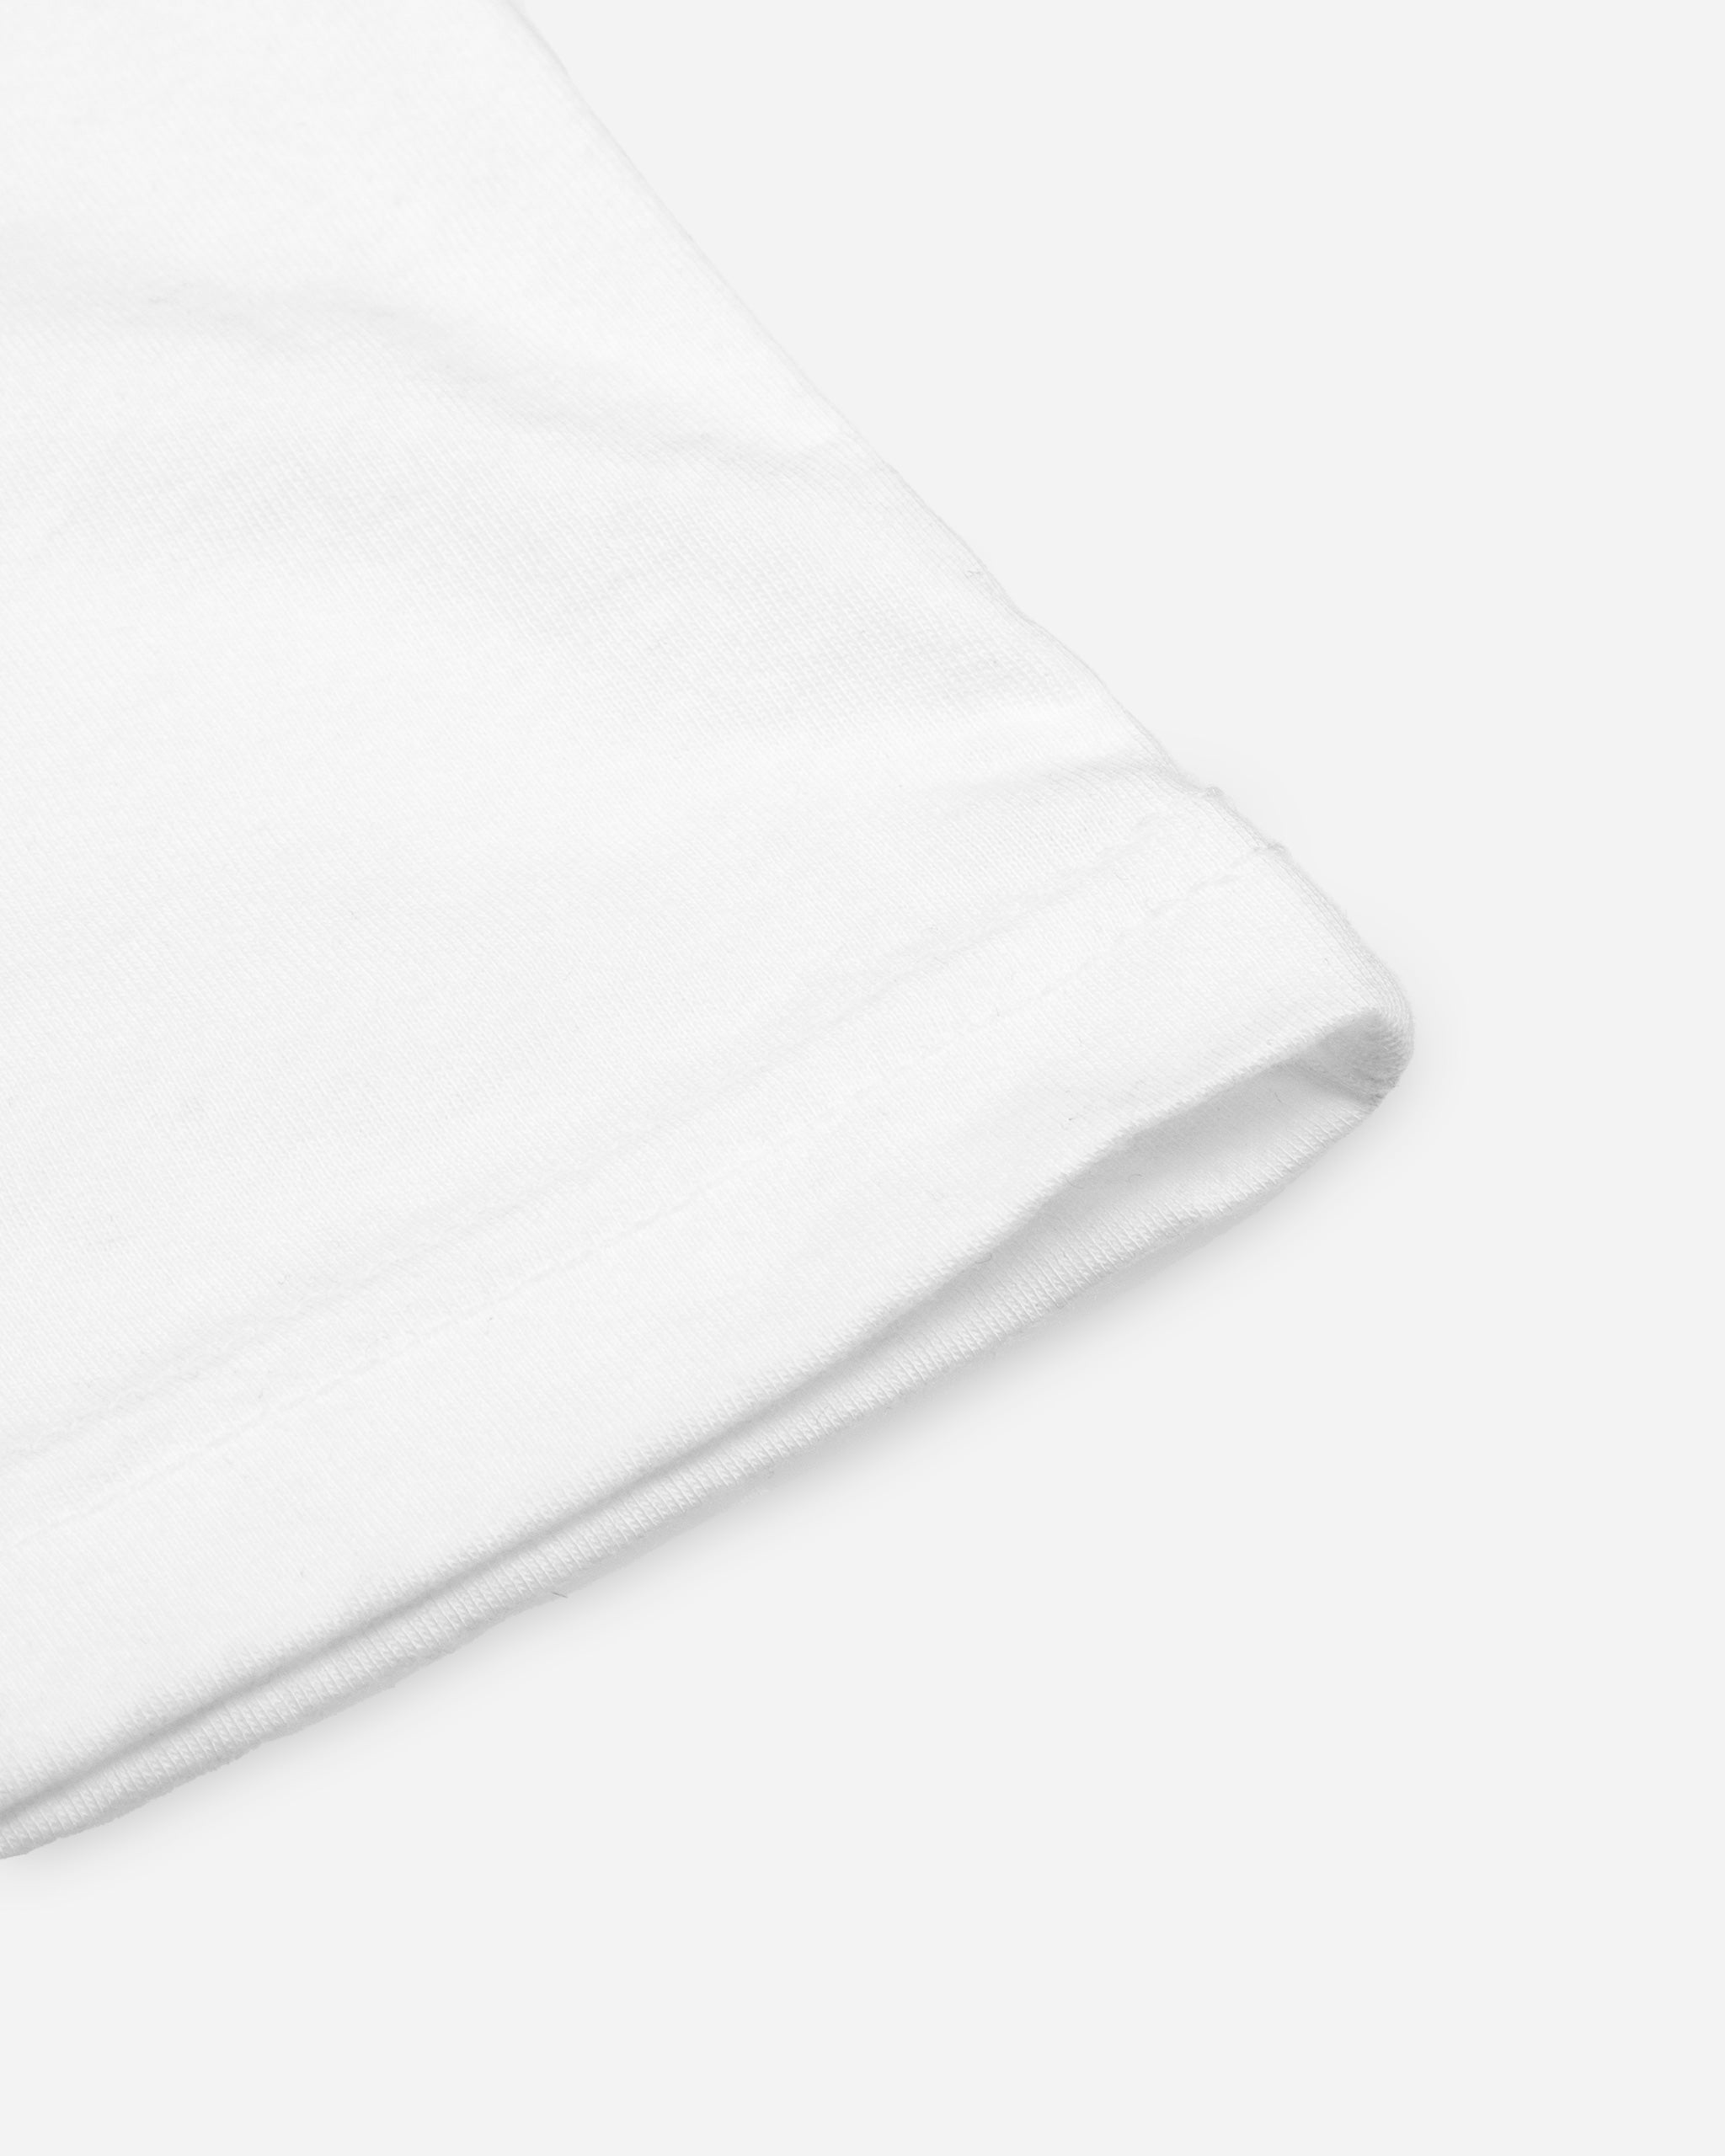 Adam's Melting Logo White T-Shirt